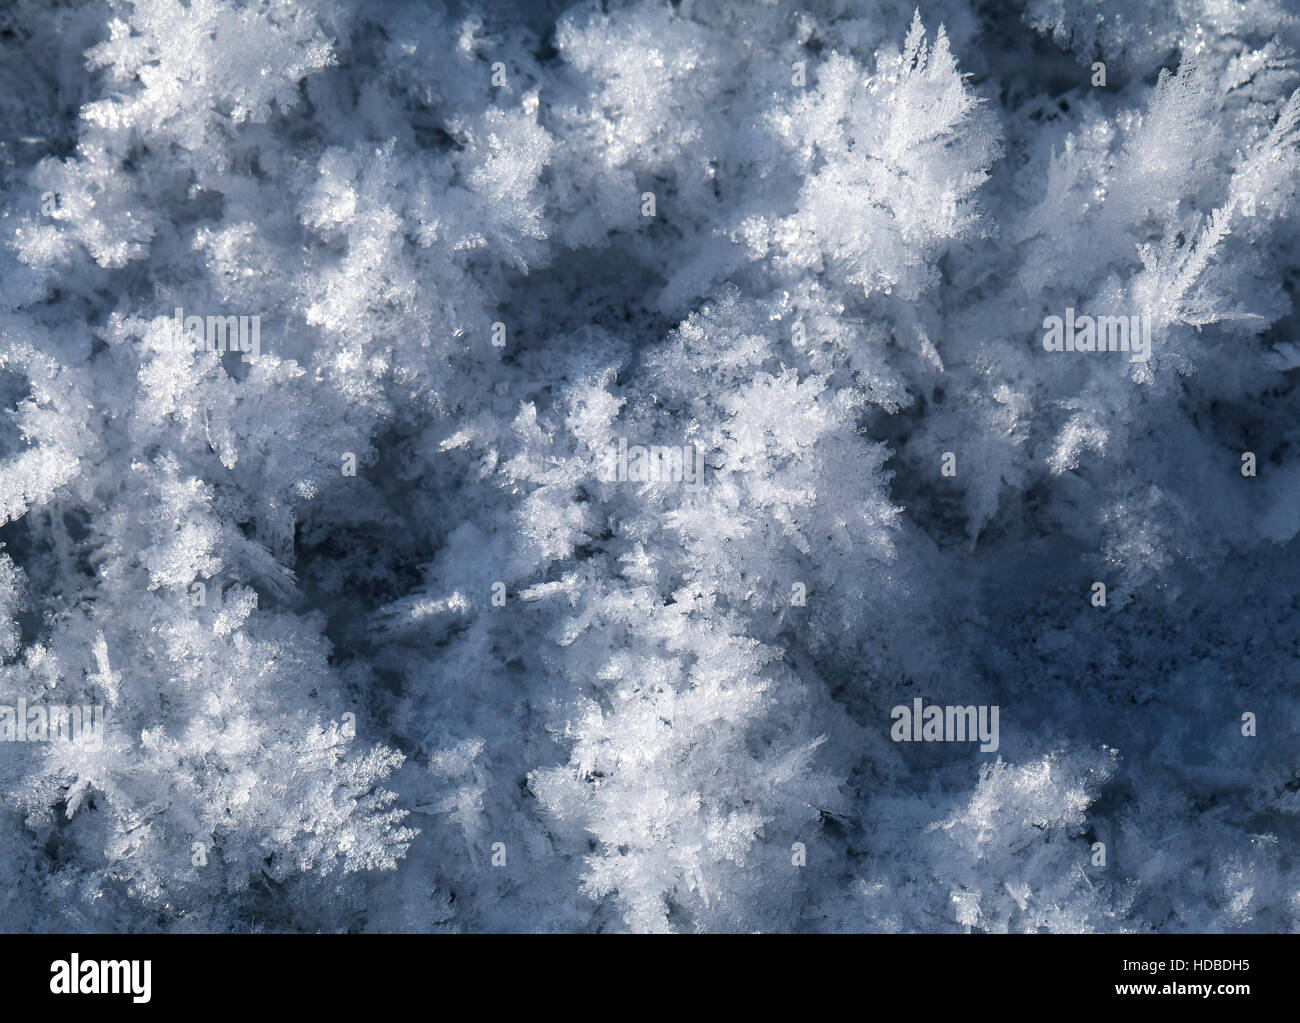 Big snow crystals on the ground, macro shot Stock Photo